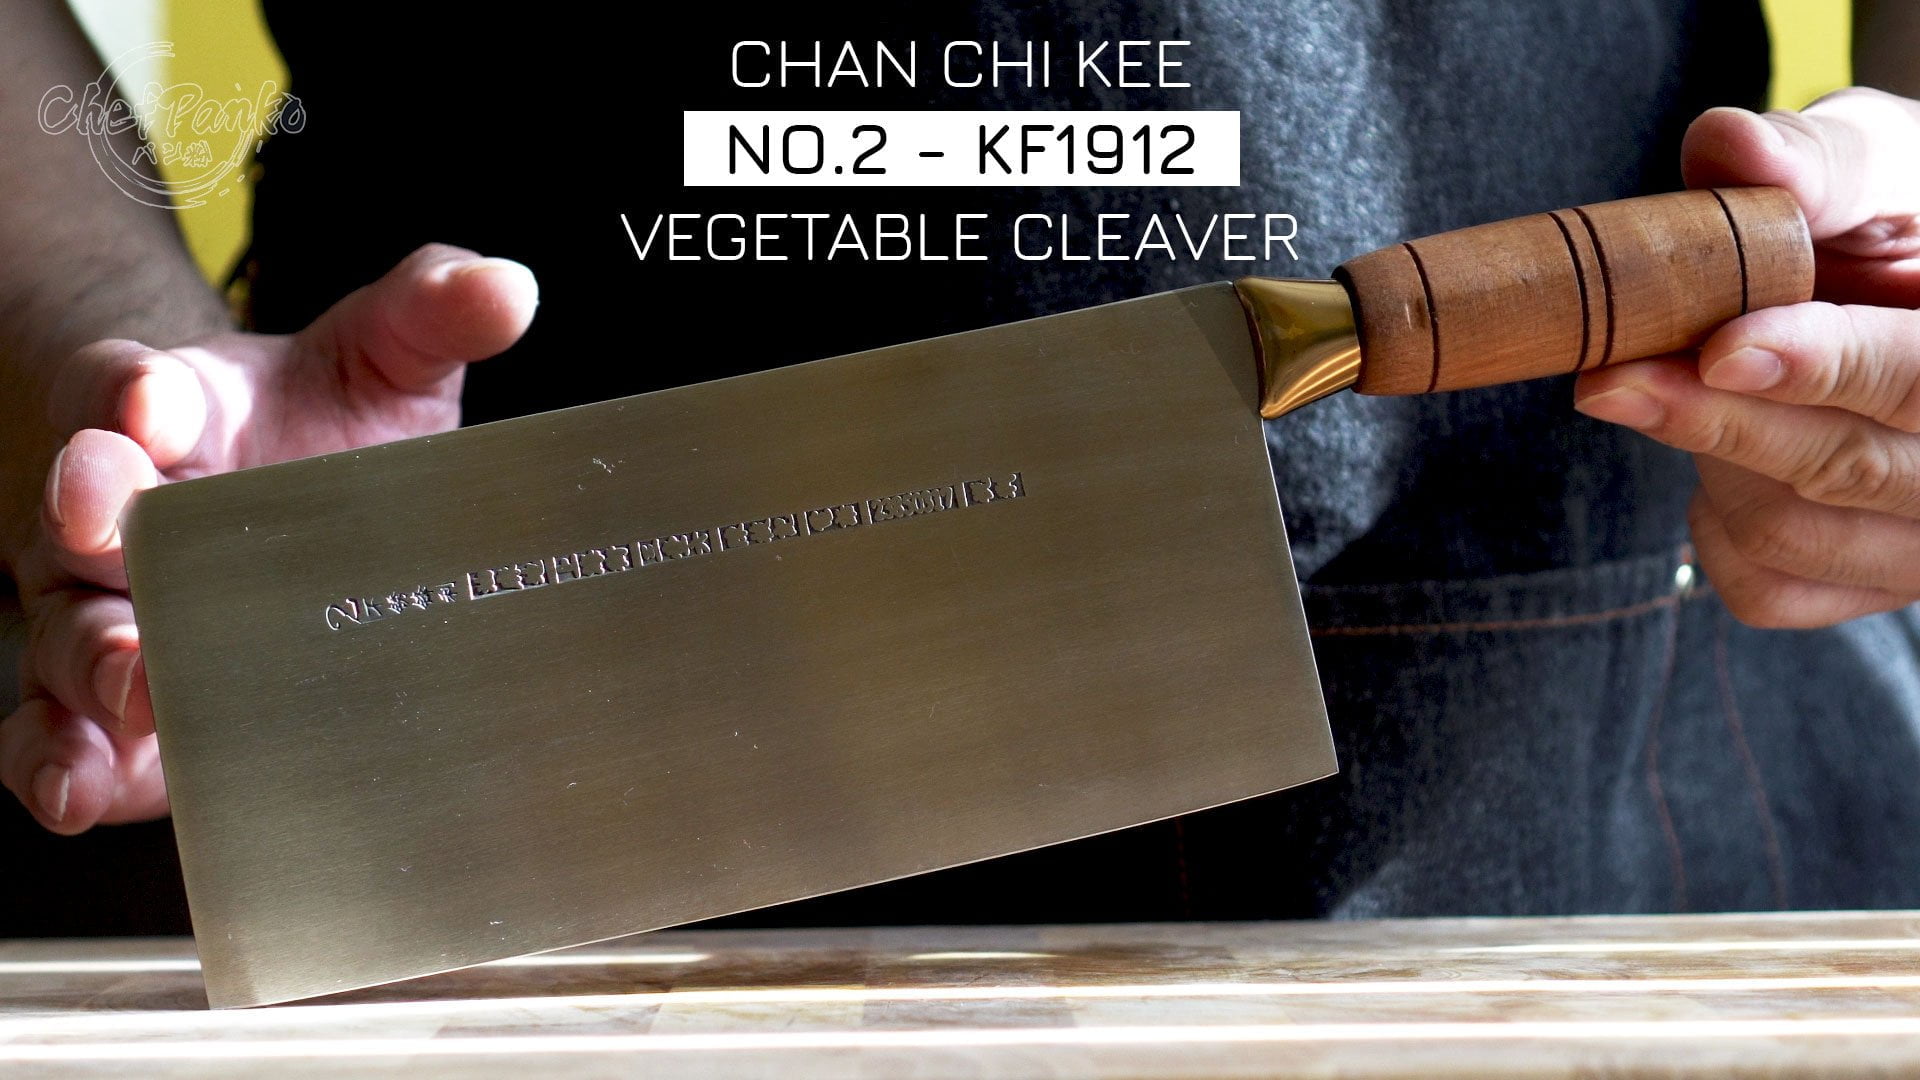 https://www.chefpanko.com/wp-content/uploads/2021/06/CCK-Vegetable-Cleaver-Slicer-KF1912-Chan-Chi-Kee-Cai-Dao.jpg